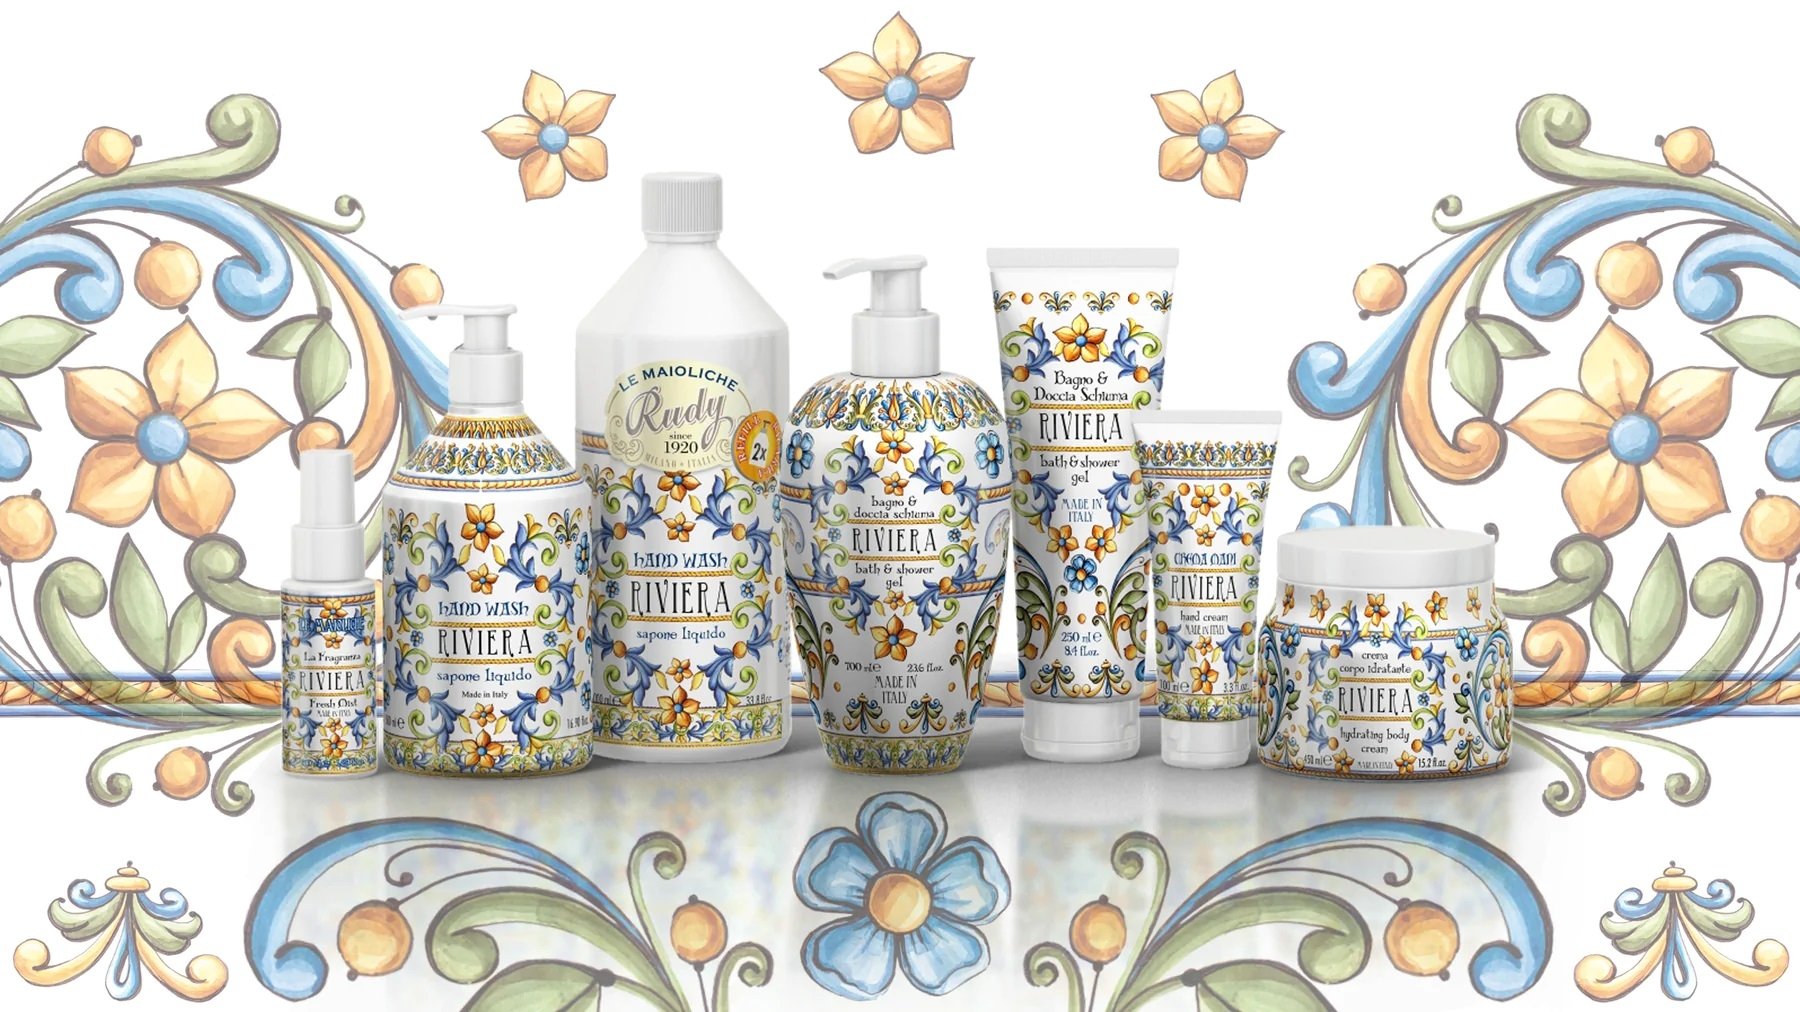 Moisturizing Body Cream RIVIERA by Rudy Profumi - |VESIMI Design| Luxury and Rustic bathrooms online